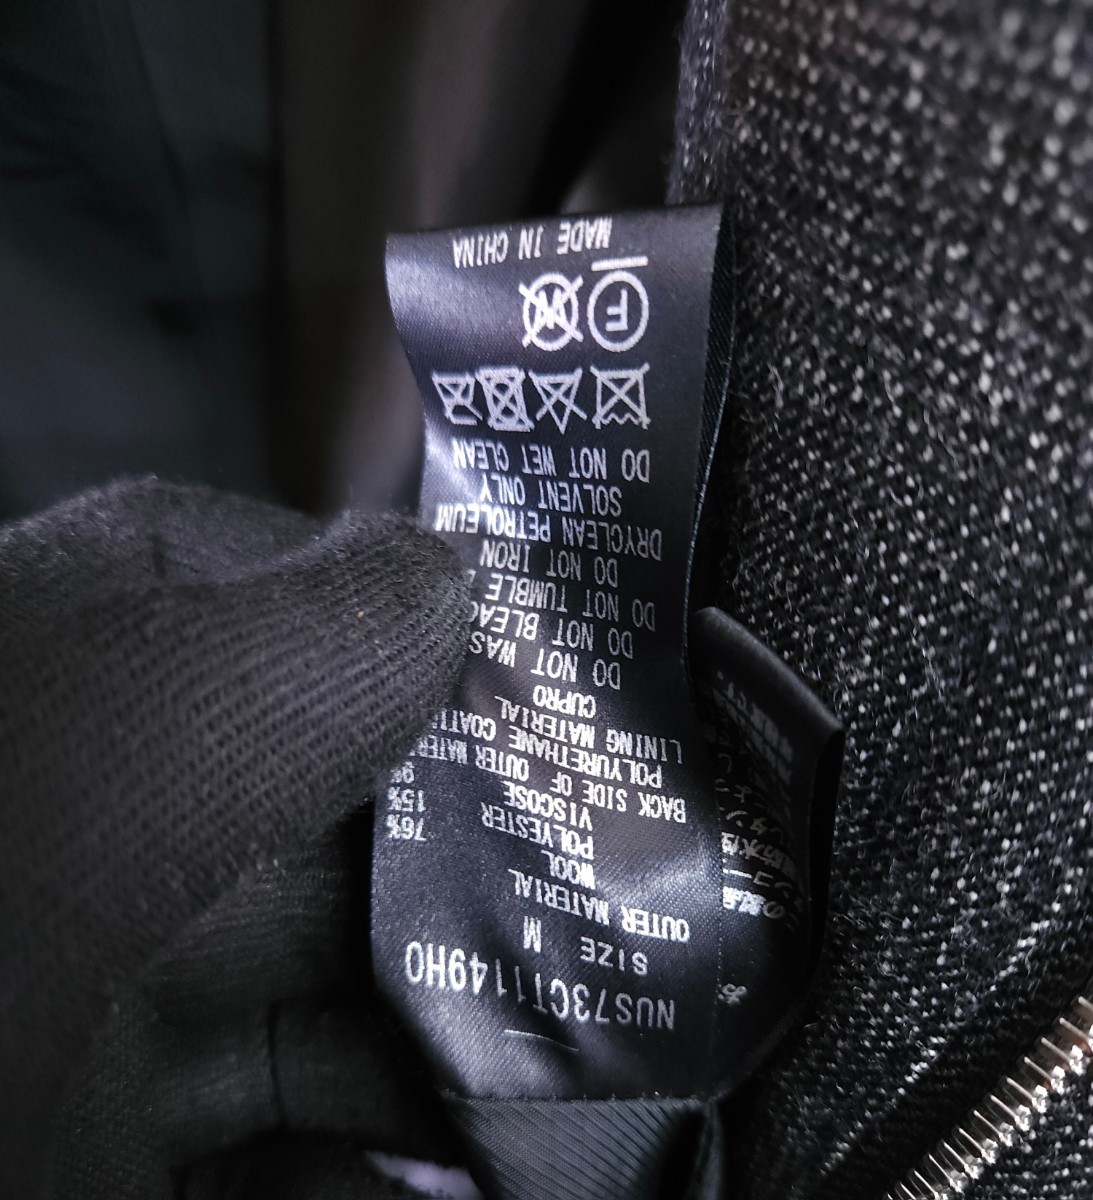 junhashimoto Jun - si Moto × Nano Universe 2re year Mod's Coat LAP пальто мужской M уголь жакет 